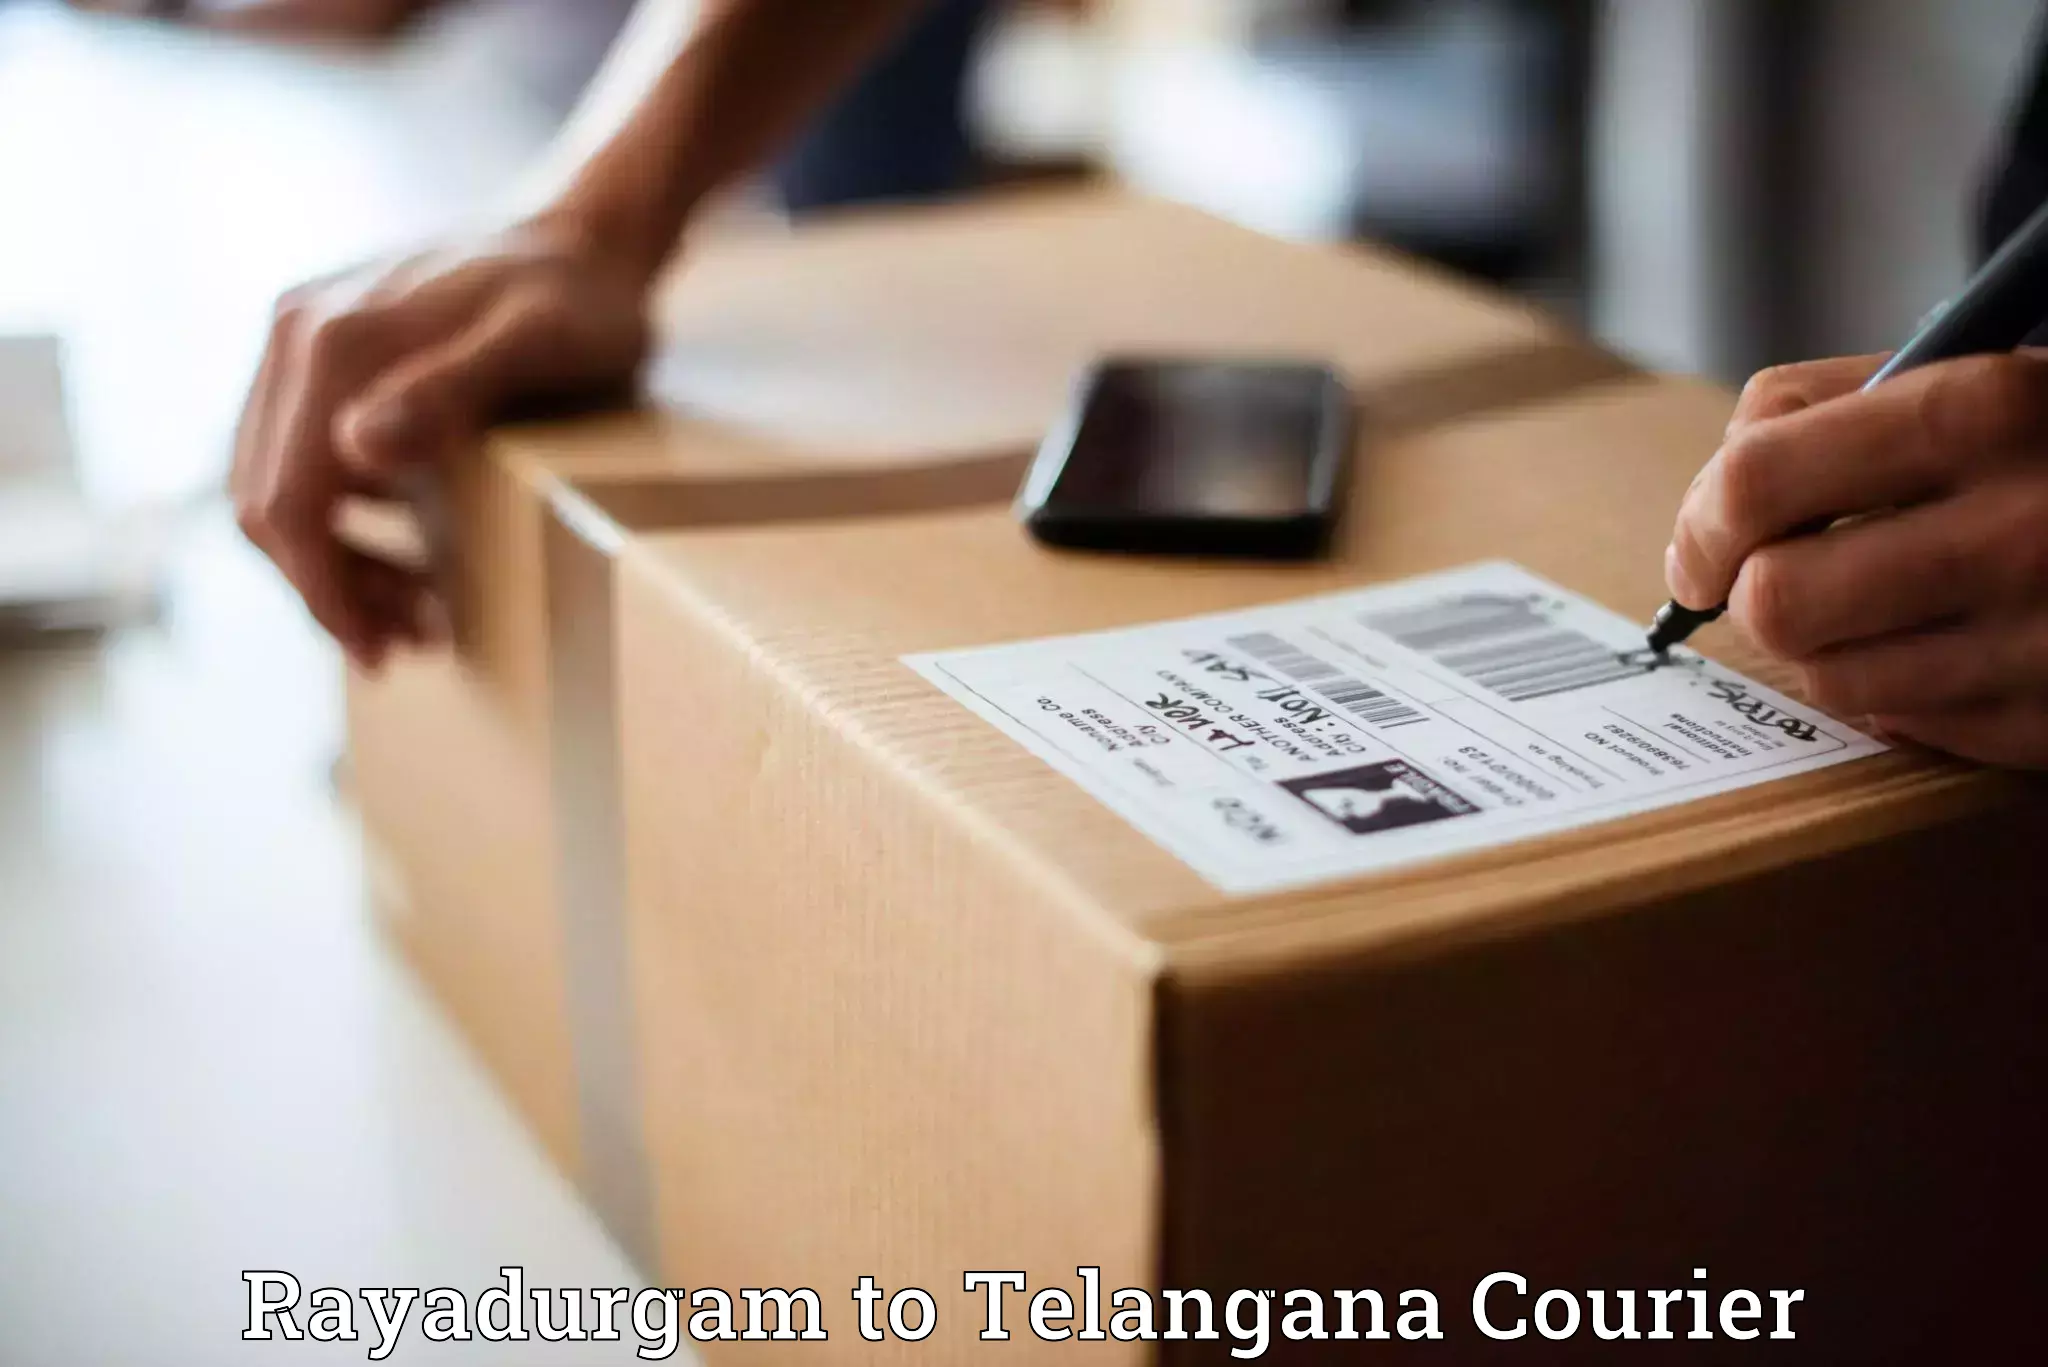 Quick dispatch service in Rayadurgam to Telangana